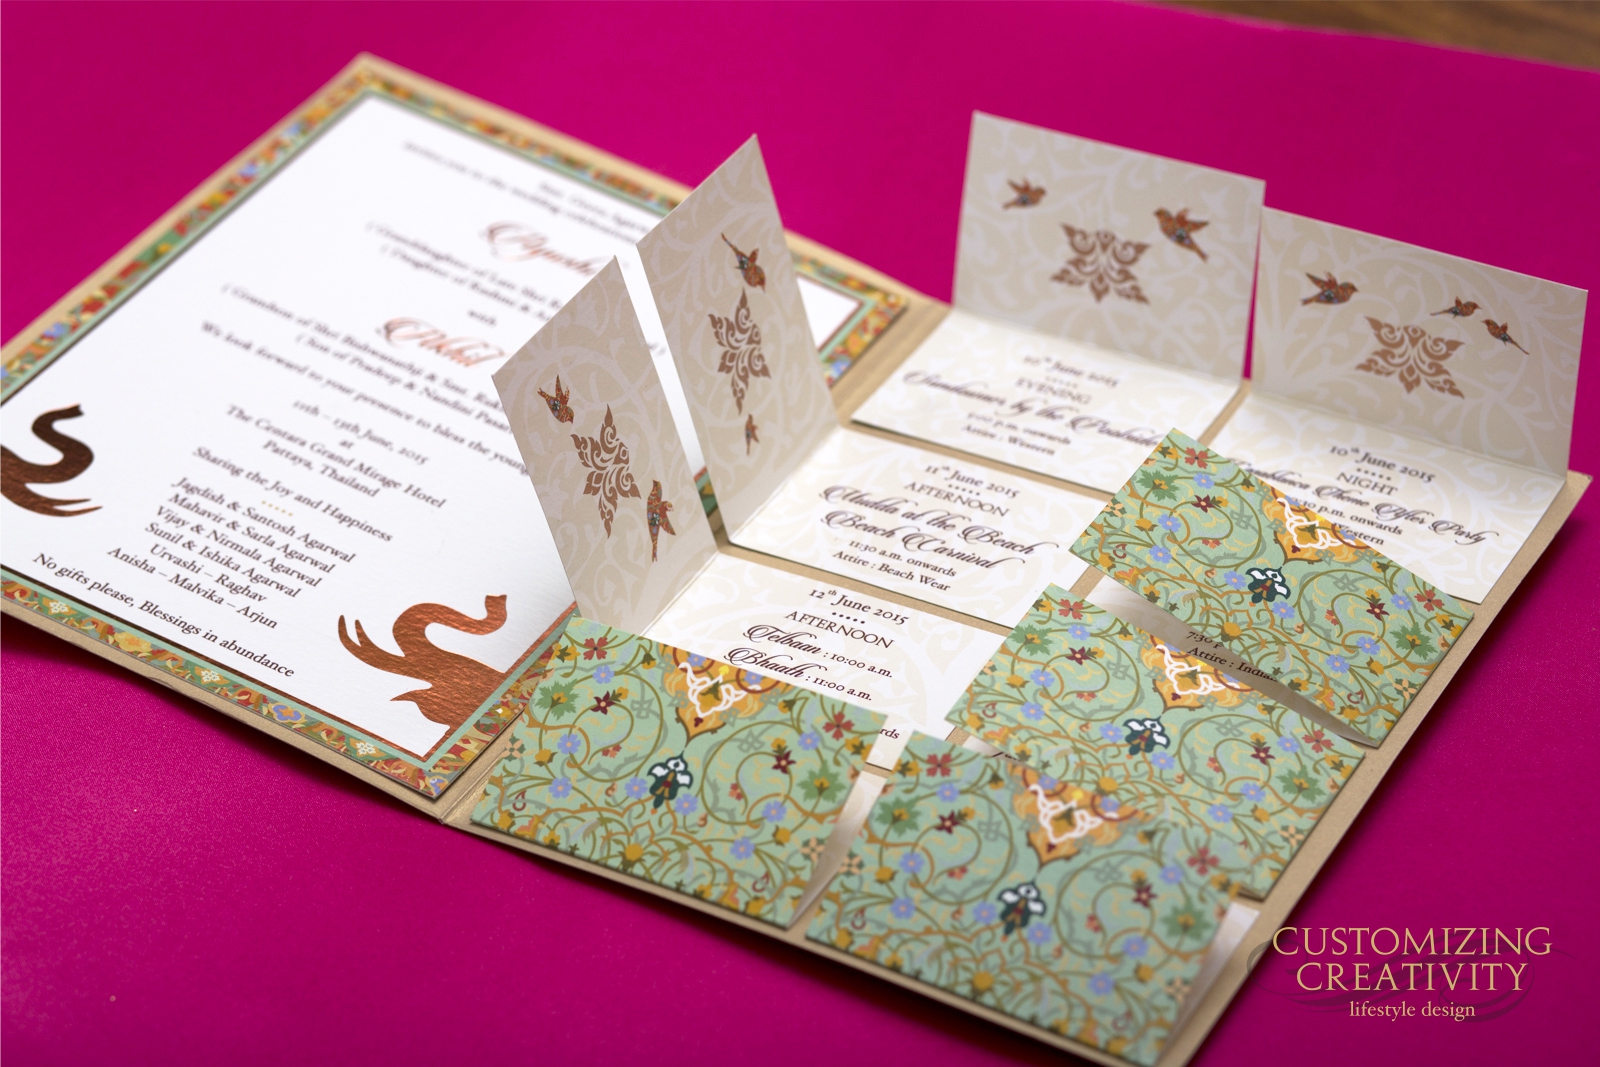 Bespoke Indian wedding invitations by Customizing Creativity